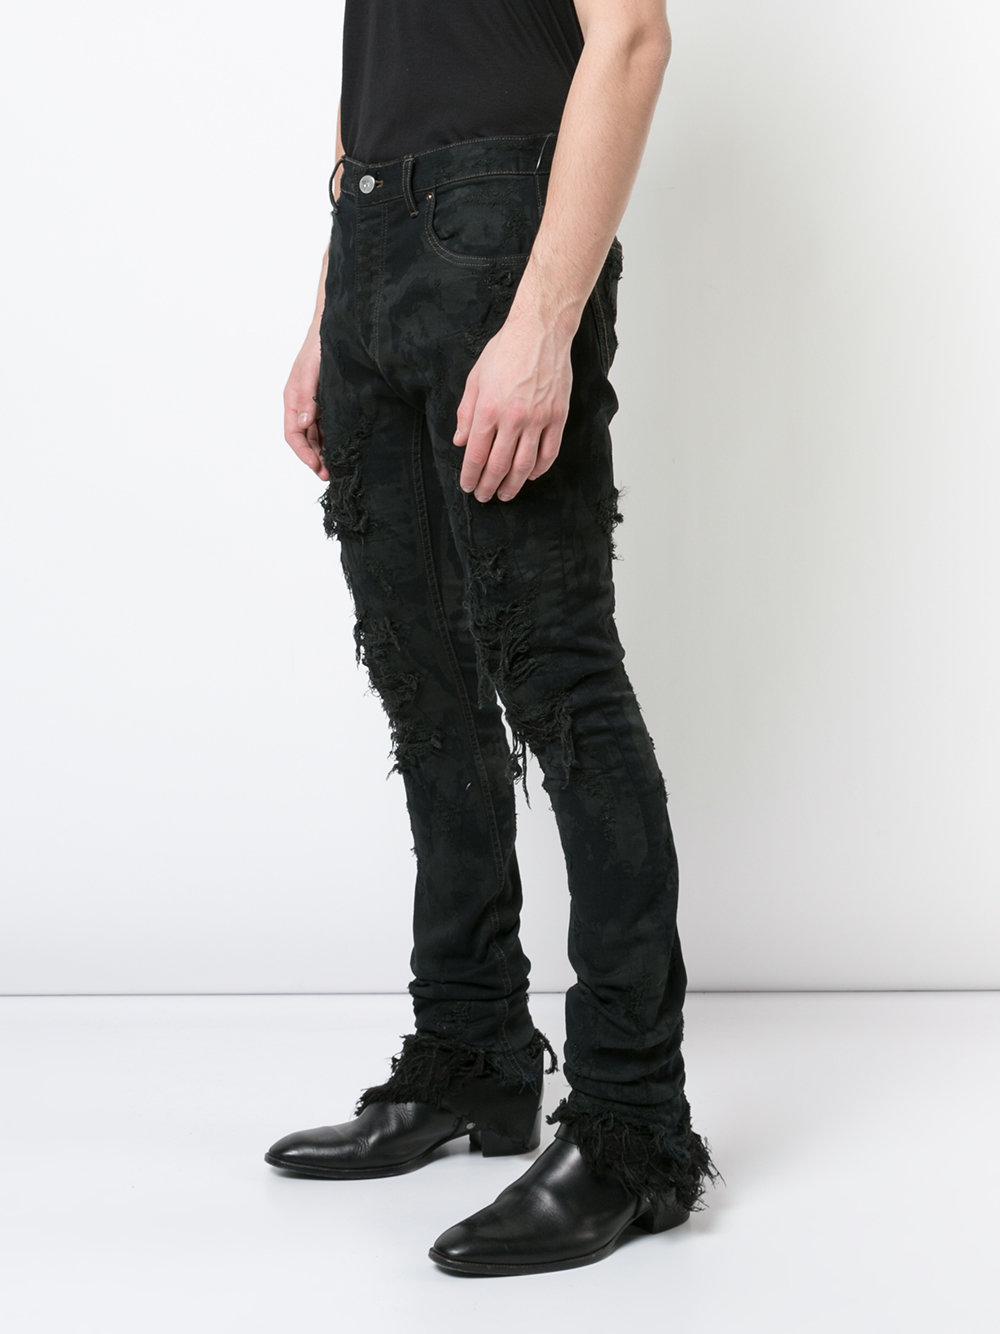 Fagassent Denim Paint Splatter Distressed Jeans in Black for Men - Lyst